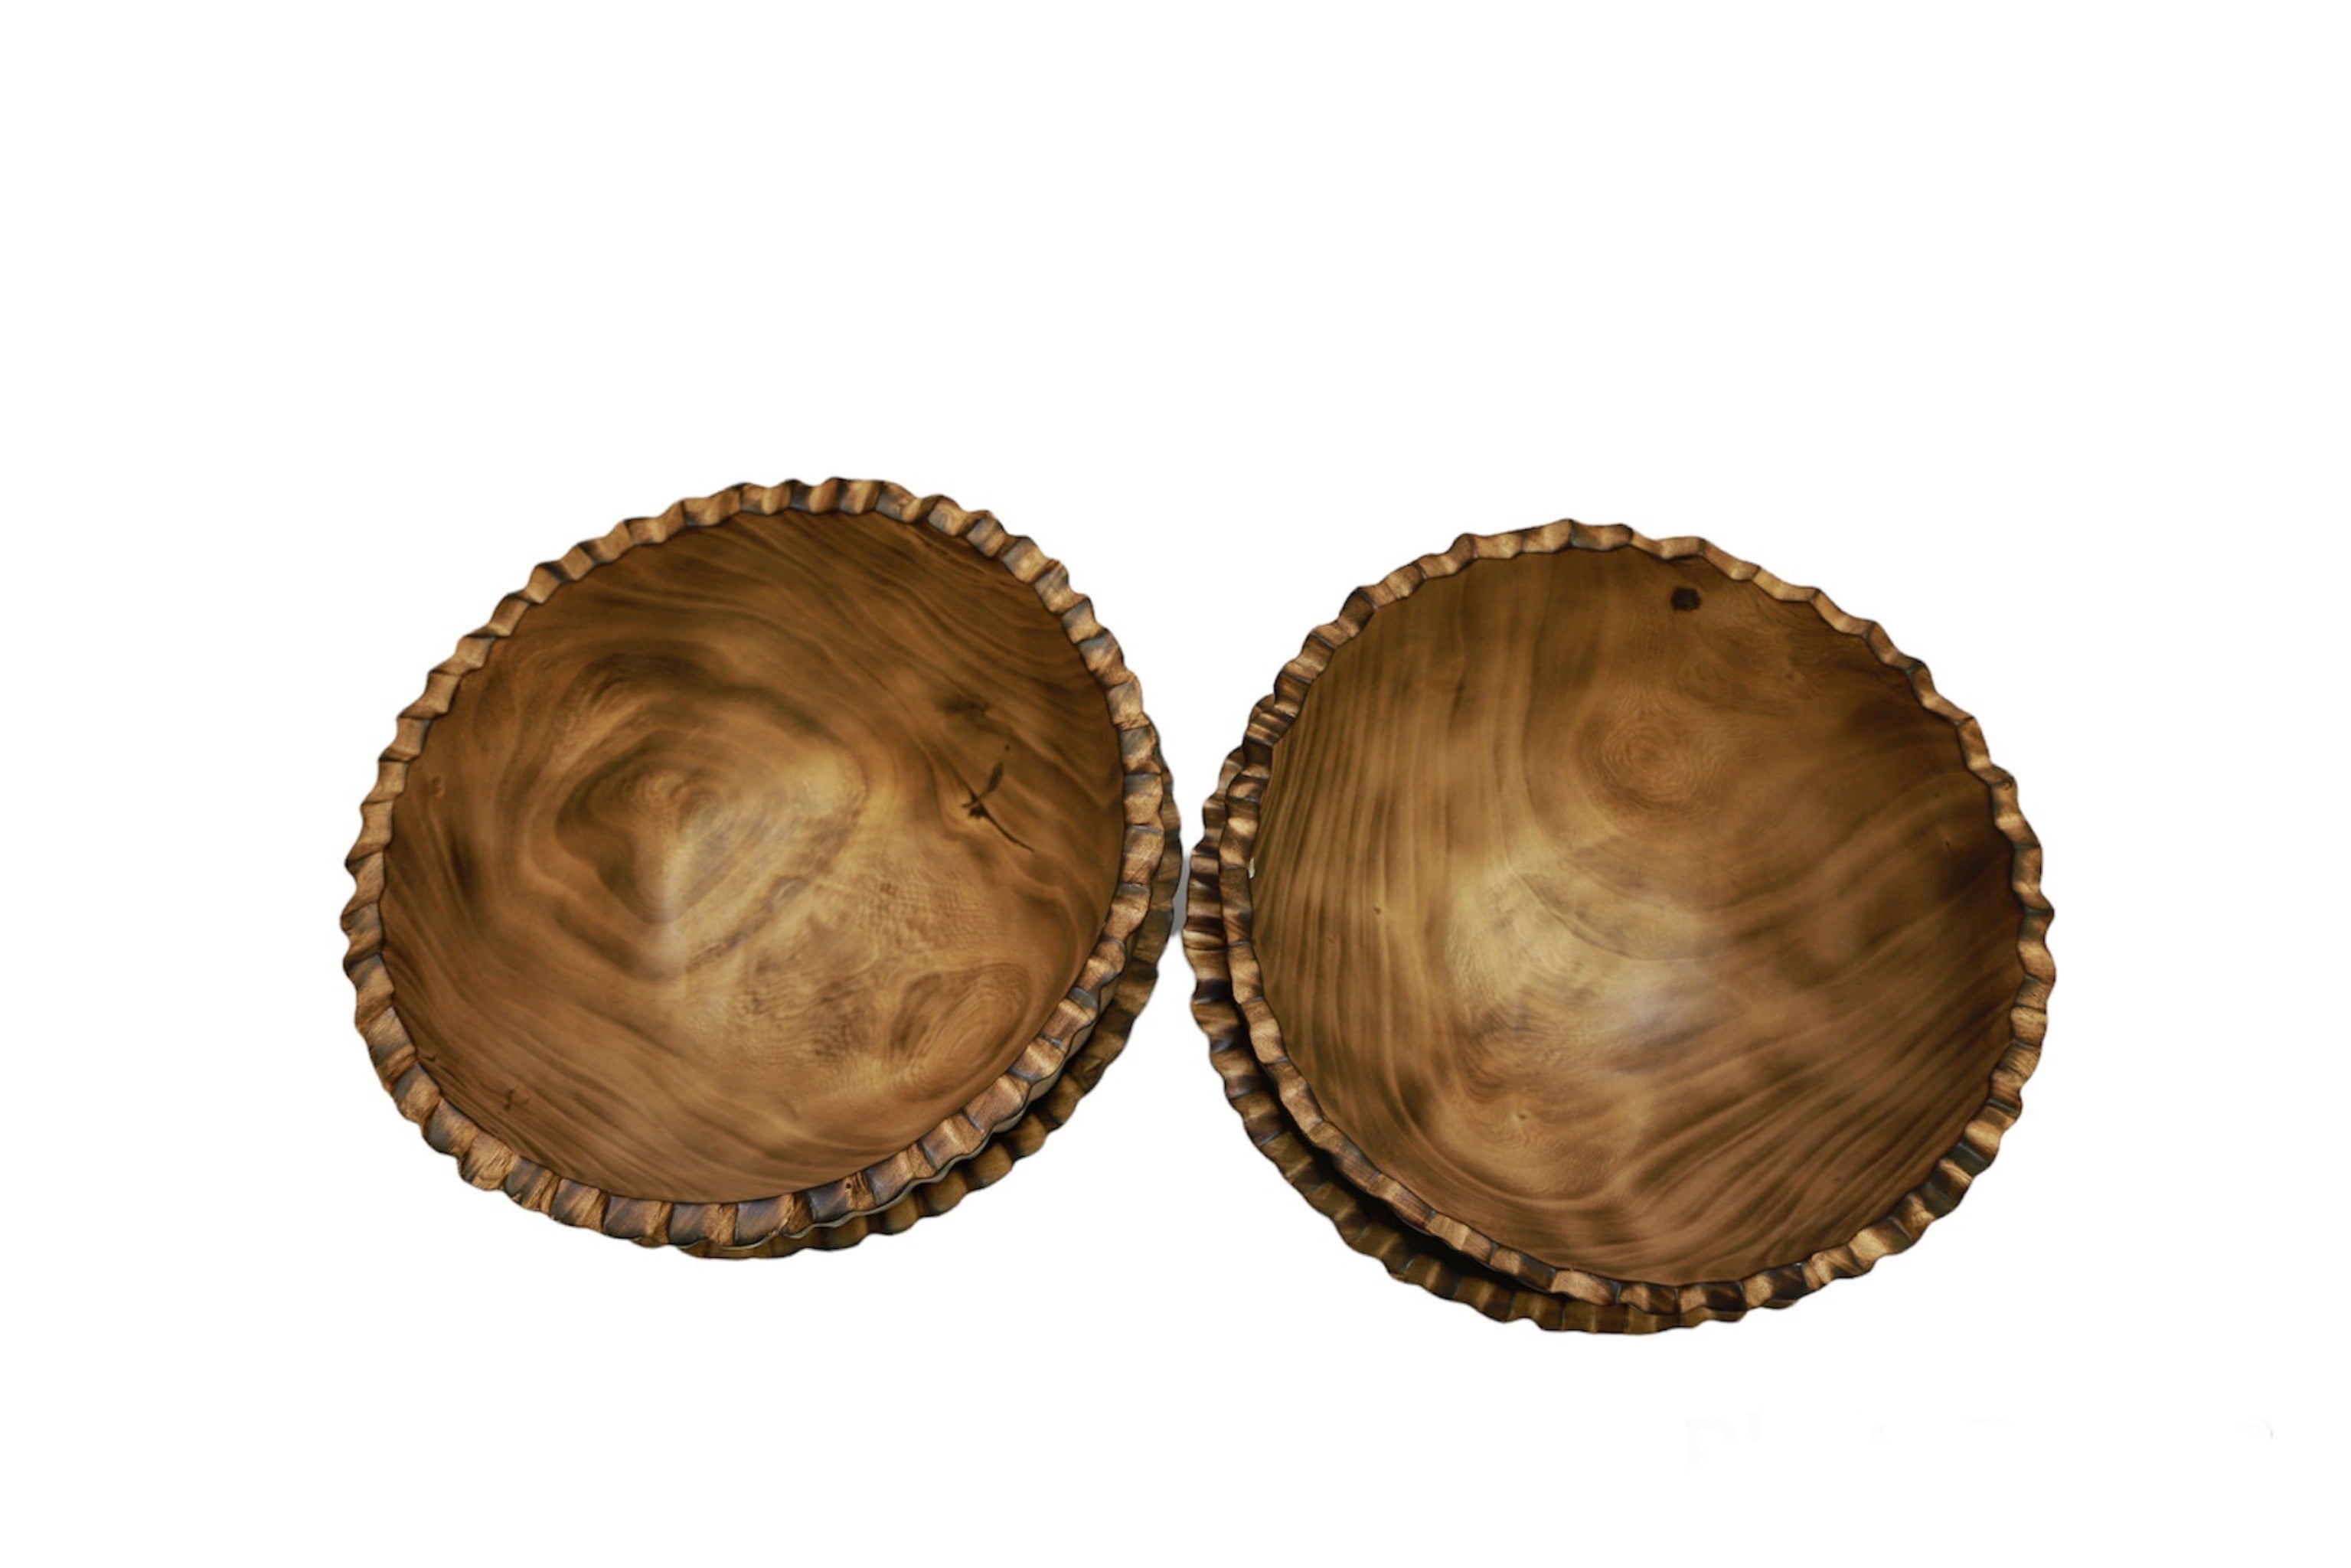 ZEBRA DECORATED BOWL 12” - Wooden Bowls Serving Bowls Contemporary Bowl Housewarming Gift Home Decoration Handmade Salad Bowl Fruit Zebra Wood Bowl Gift for Home - Tobmarc Home Decor & Gifts 